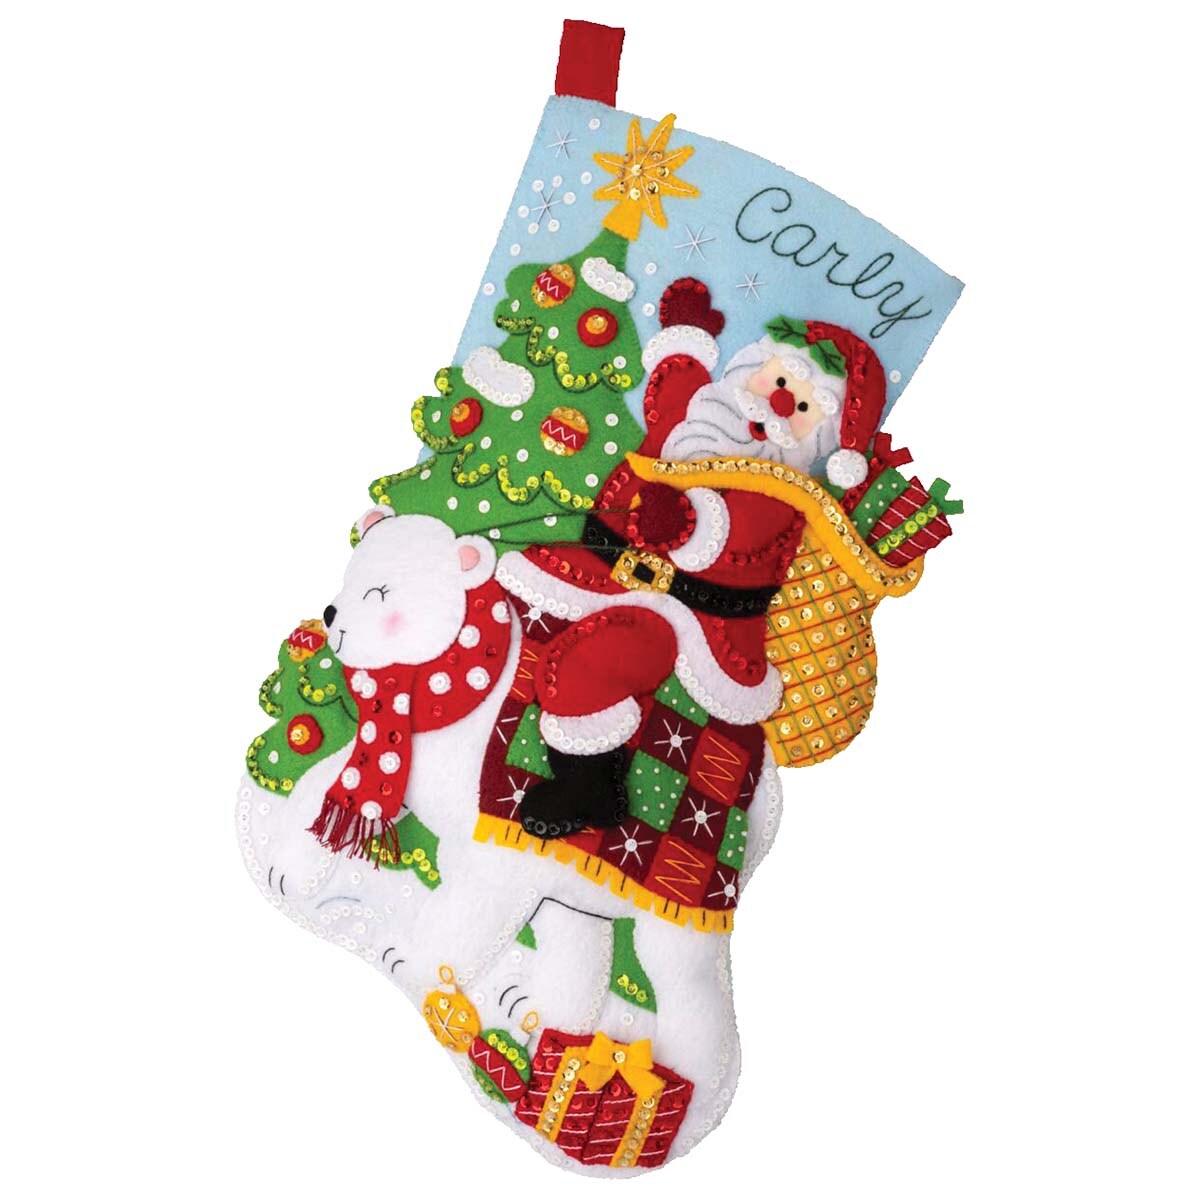 Bucilla Felt Stocking Applique Kit - Reindeer Santa